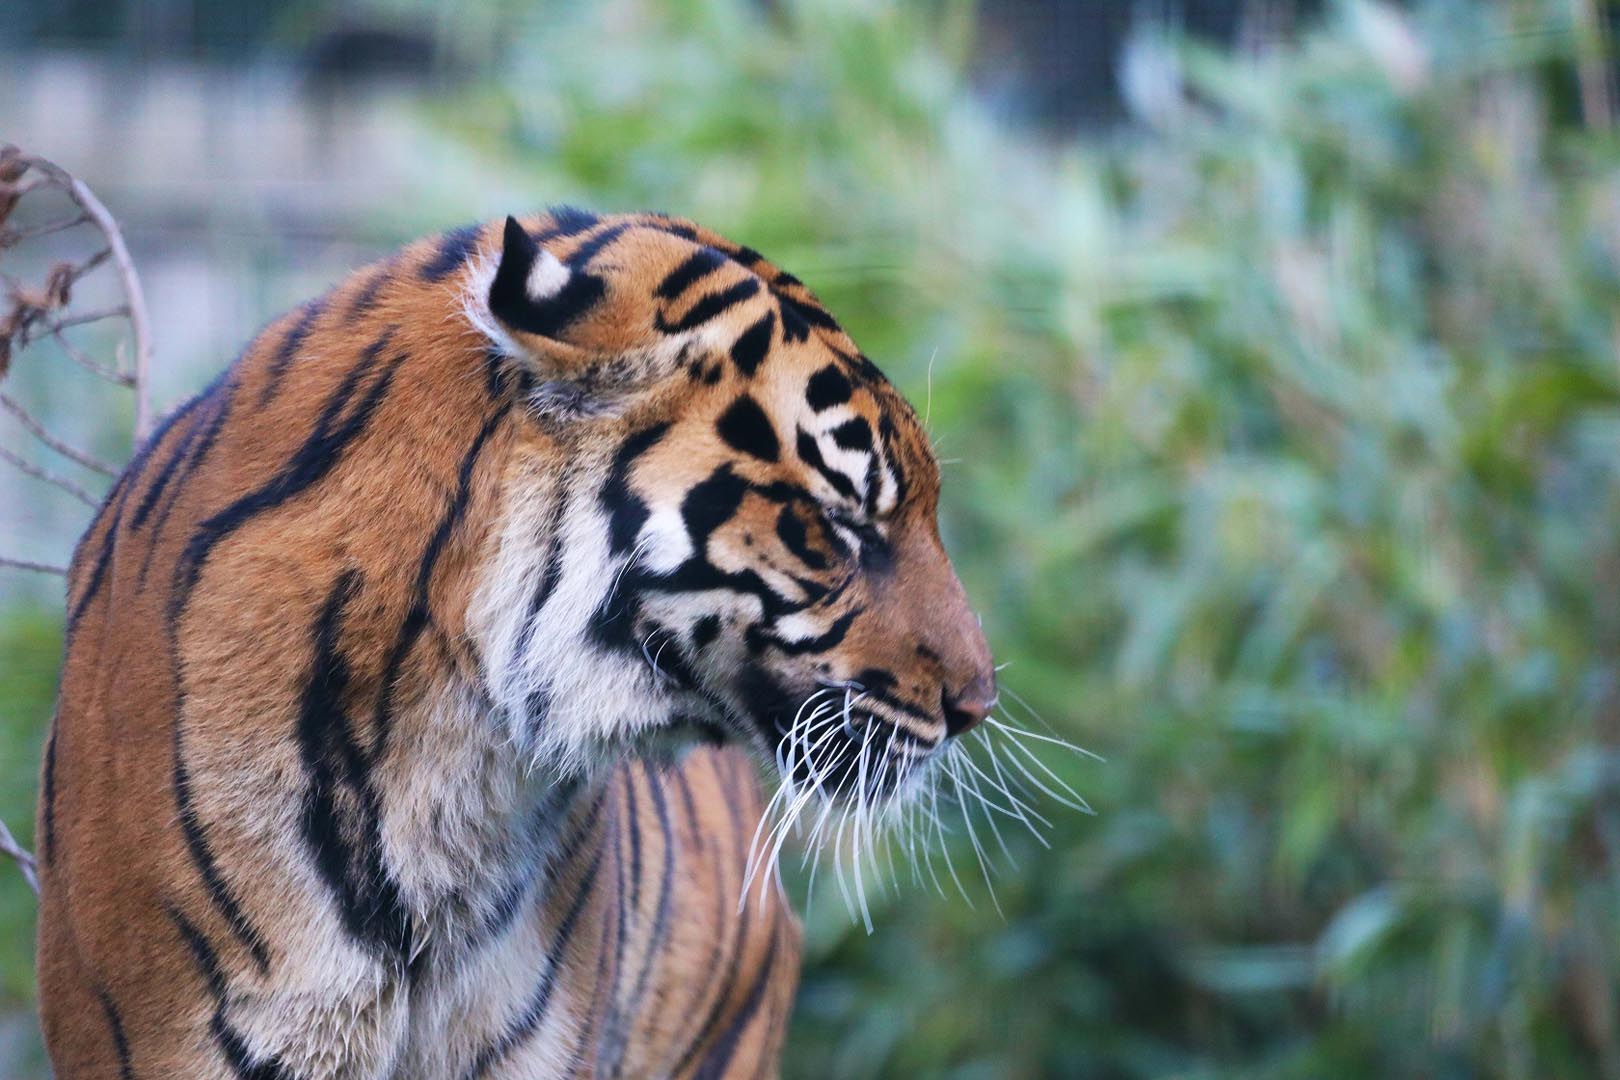 Sumatran tiger Dharma facing towards the right with eyes closed. IMAGE: Amy Middleton 2023